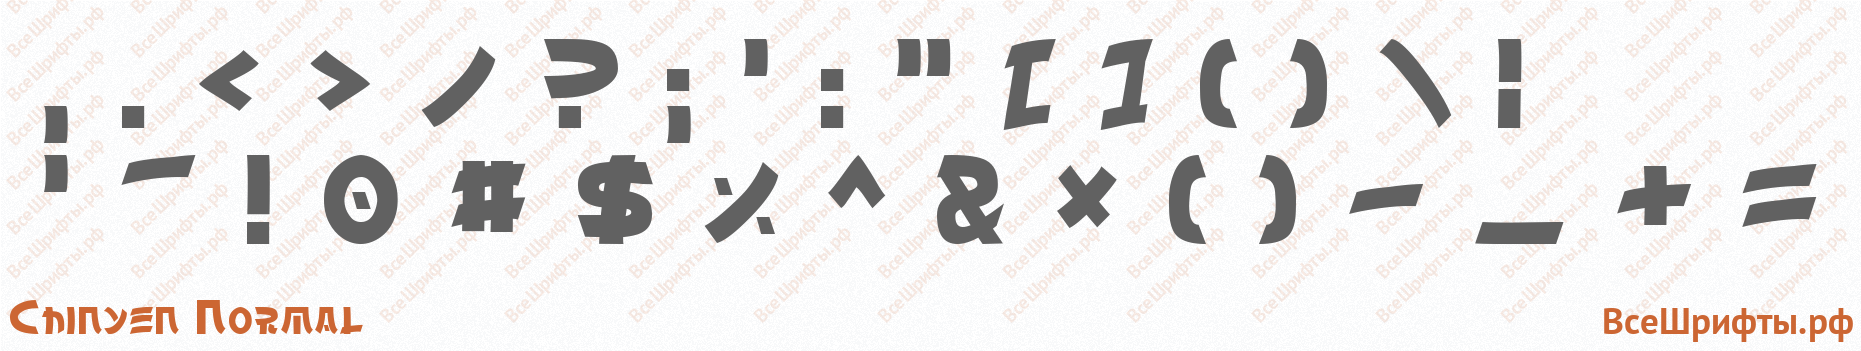 Шрифт Chinyen Normal со знаками препинания и пунктуации